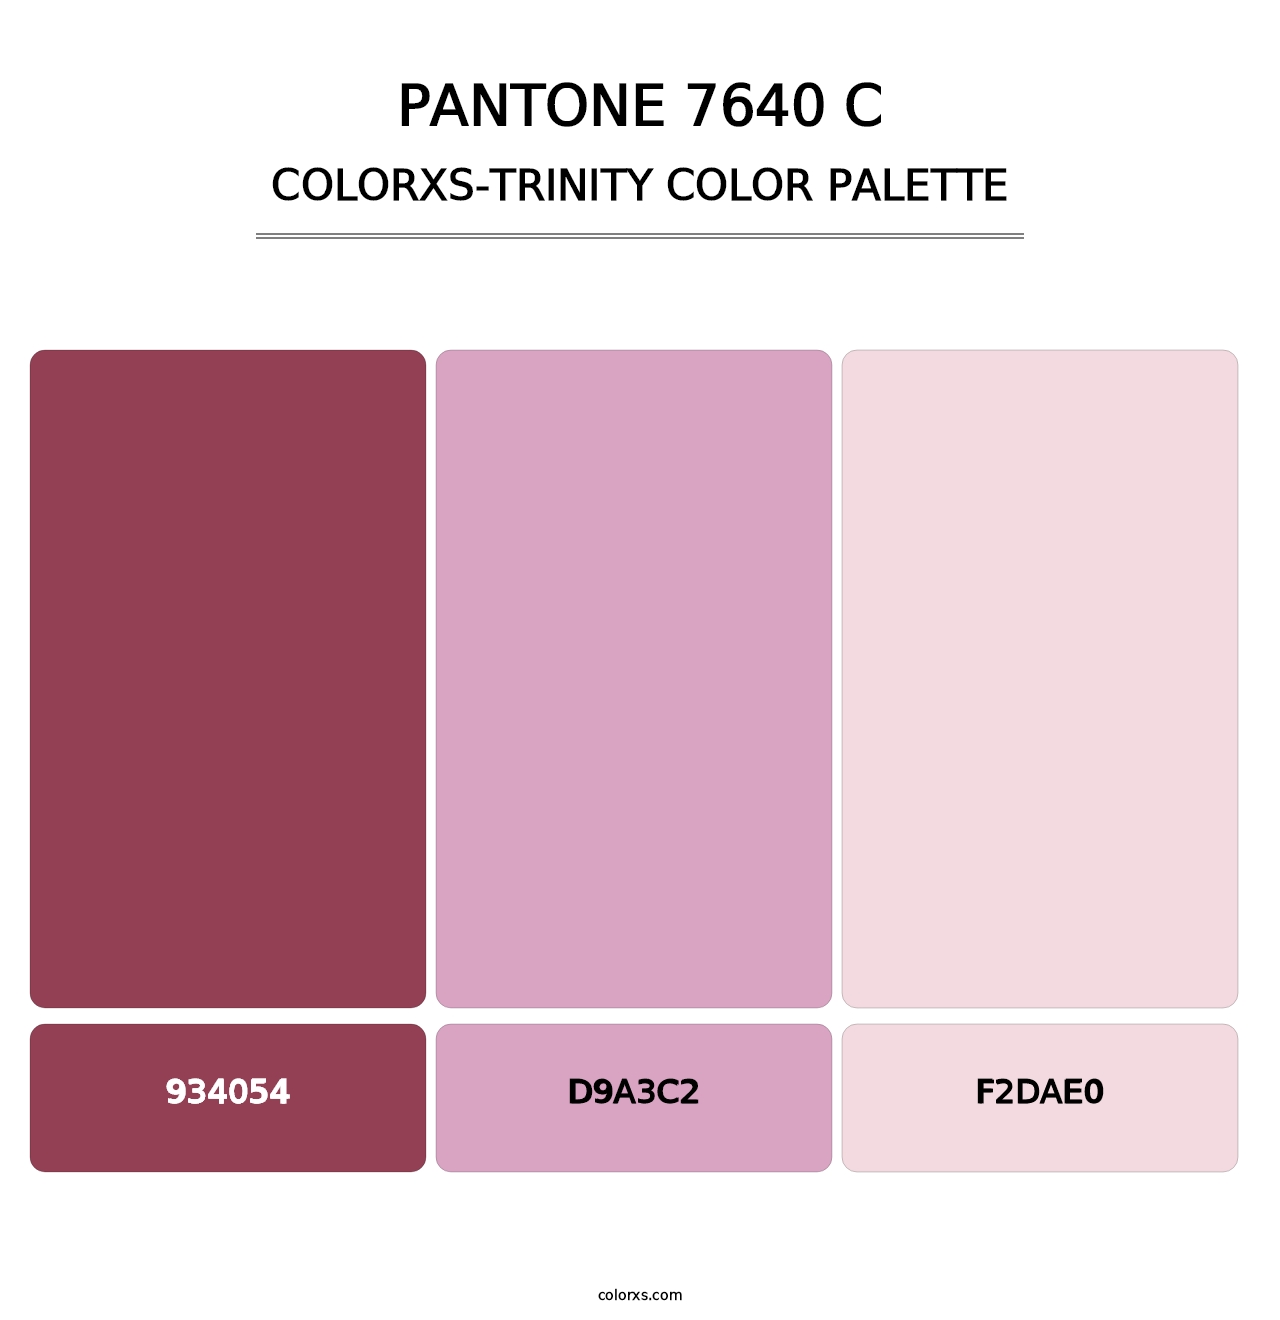 PANTONE 7640 C - Colorxs Trinity Palette